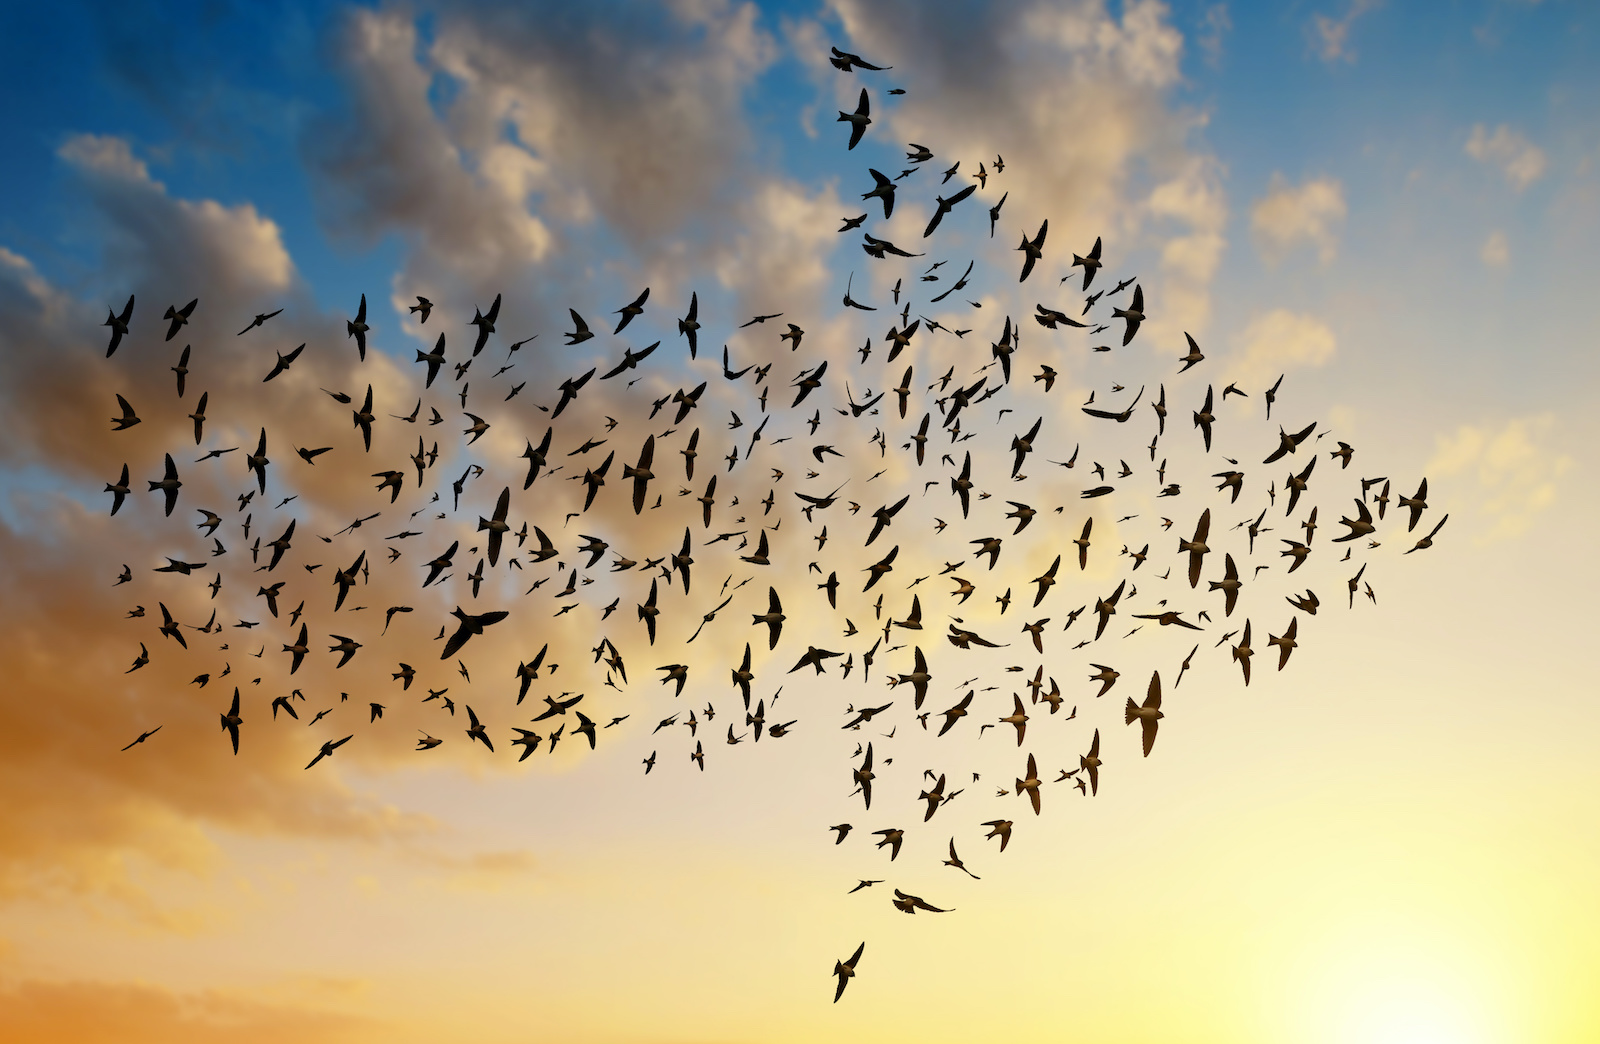 Flock of migrating birds forming an arrow